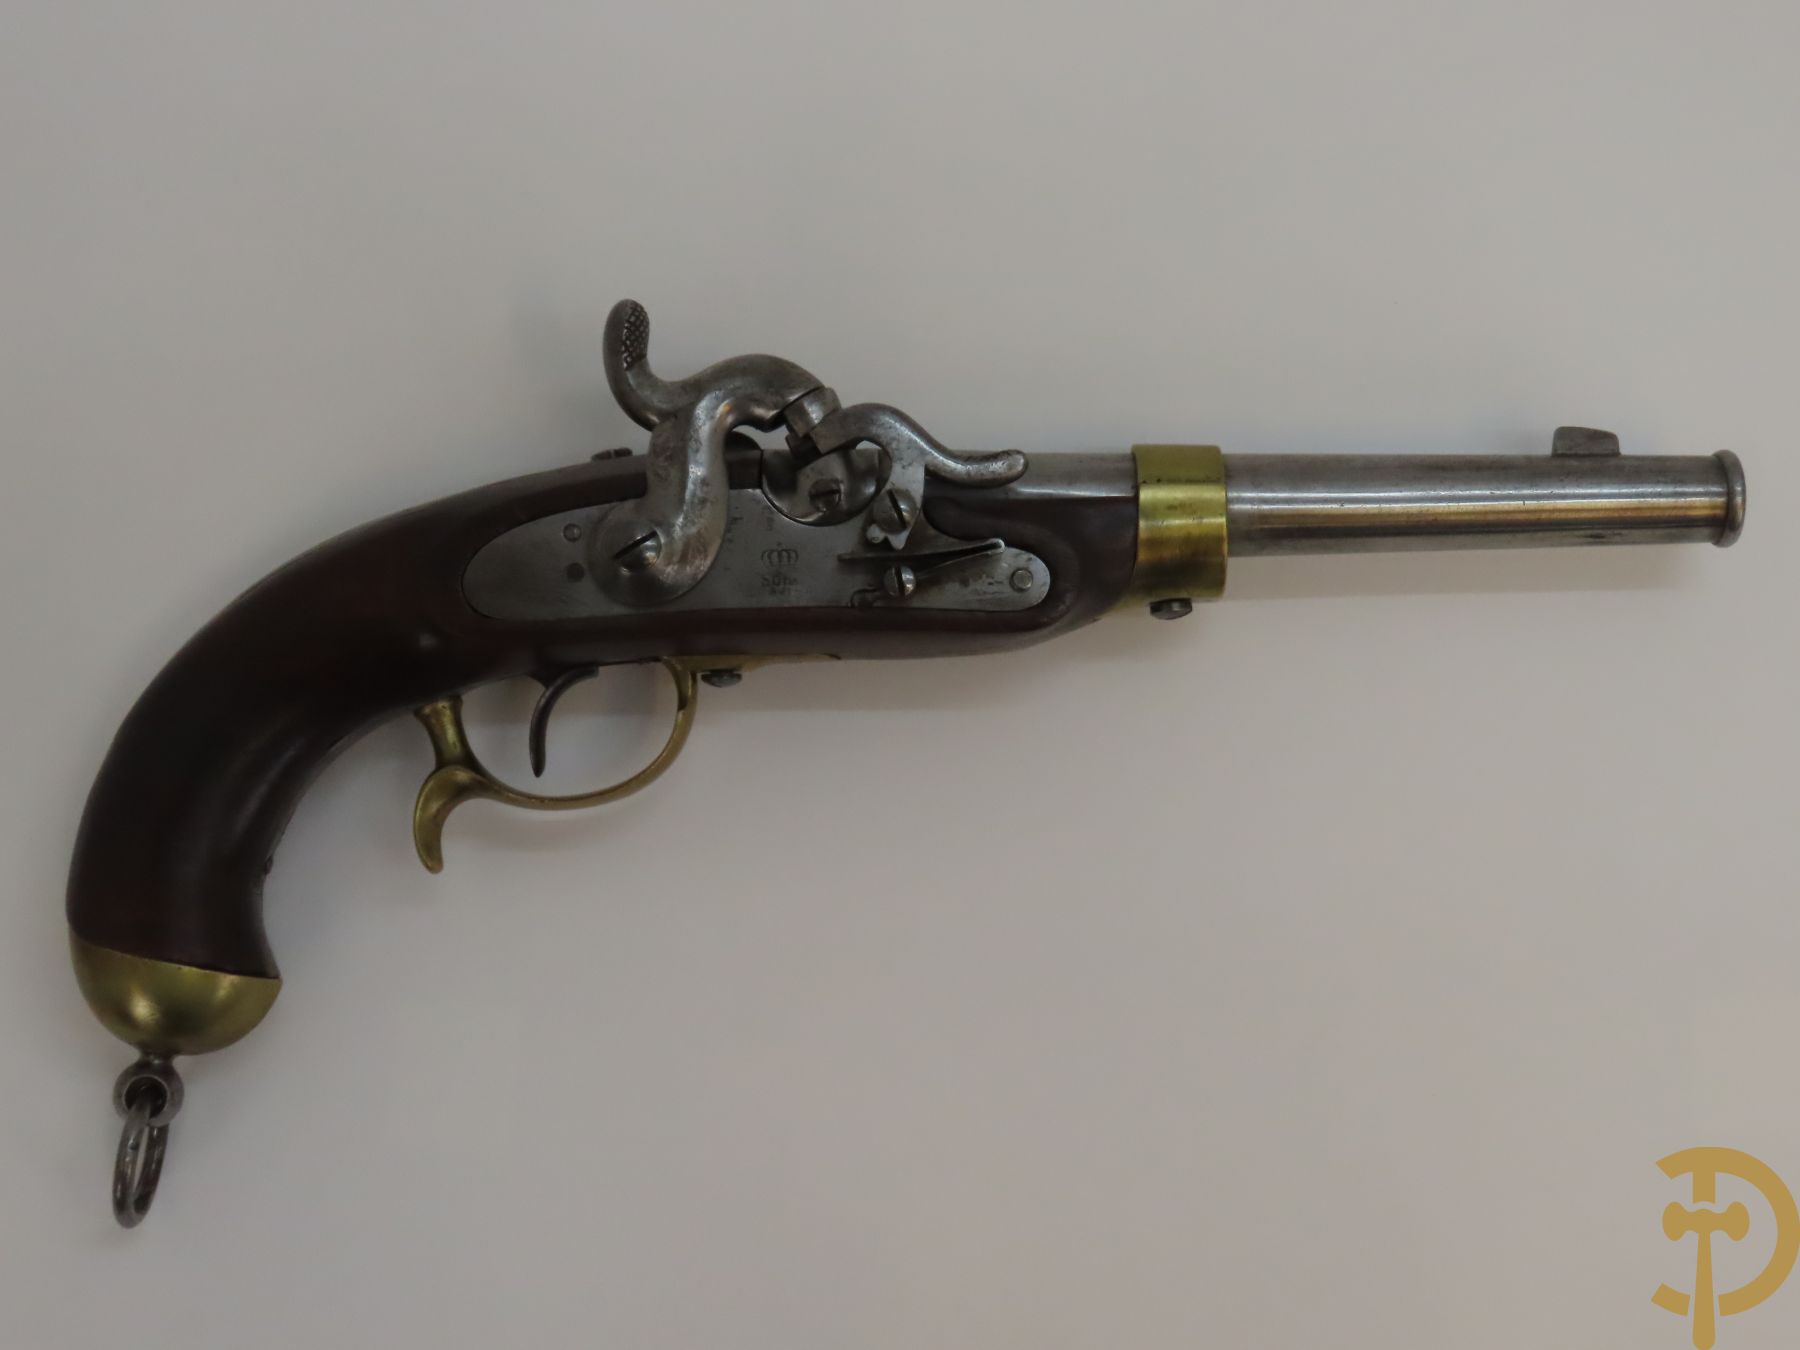 Duits militair cavallerie percussie pistool, getekend Suhl 1851